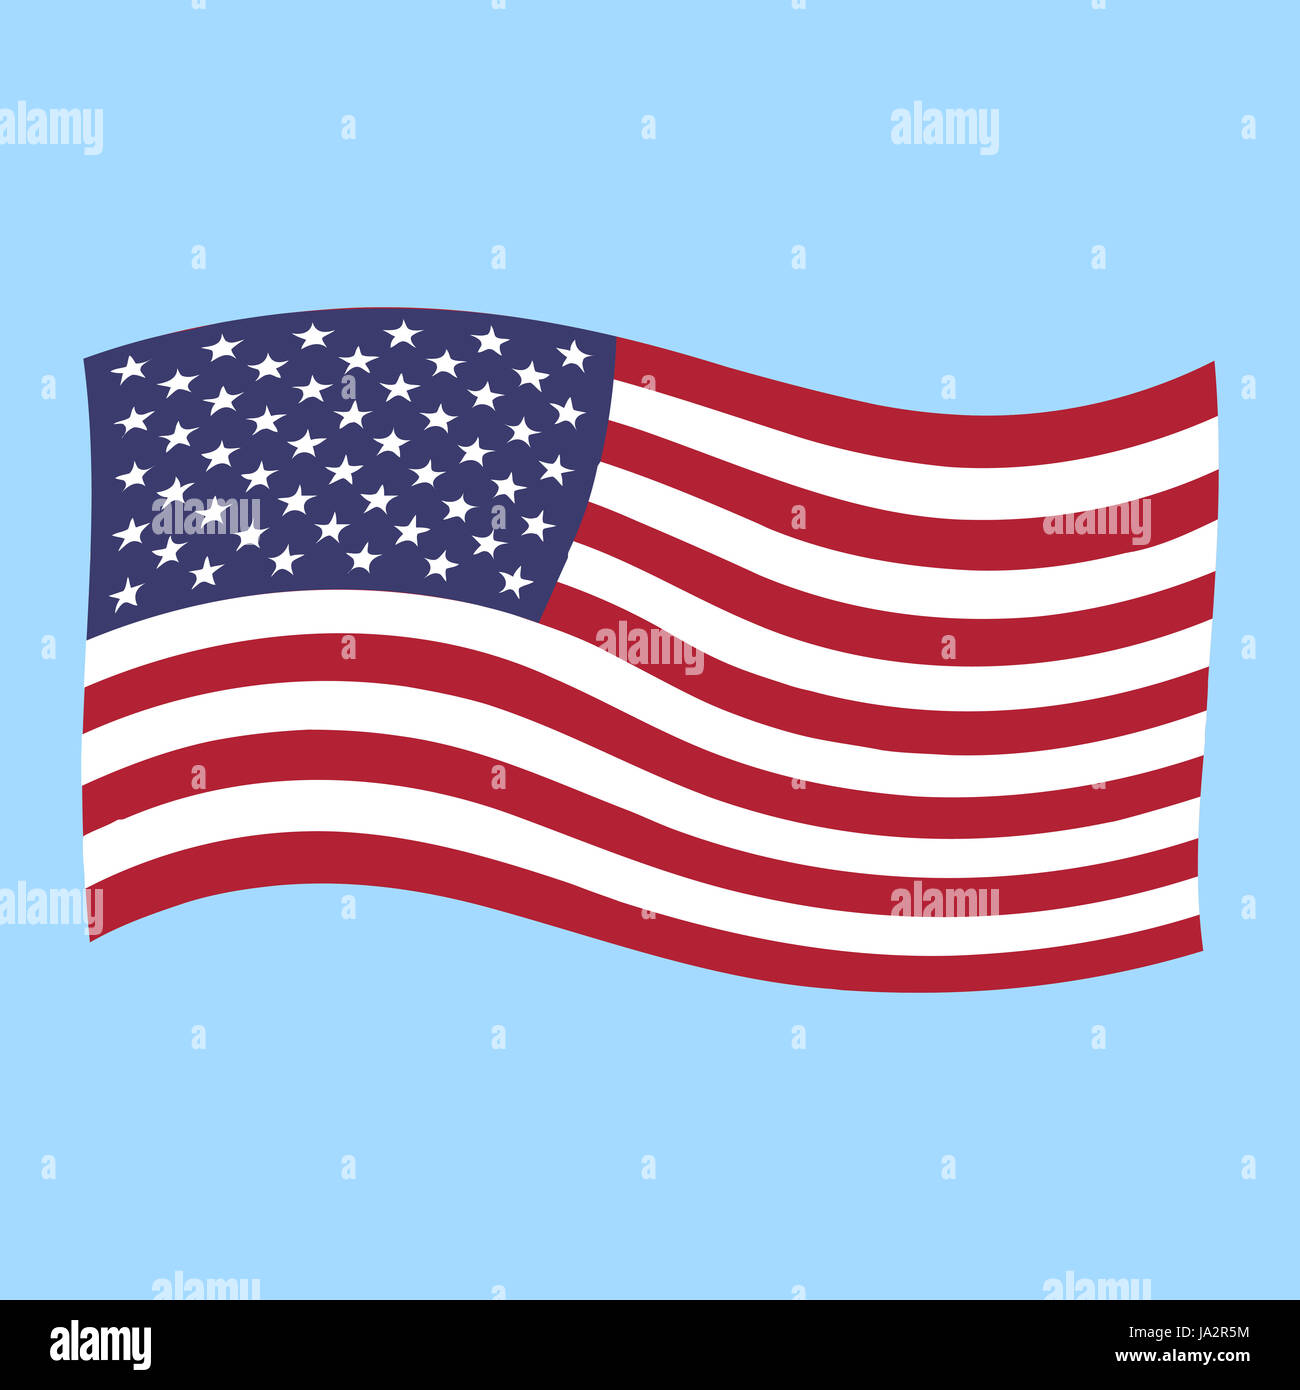 USA - United States of America - flag flying vector illustration Stock Photo